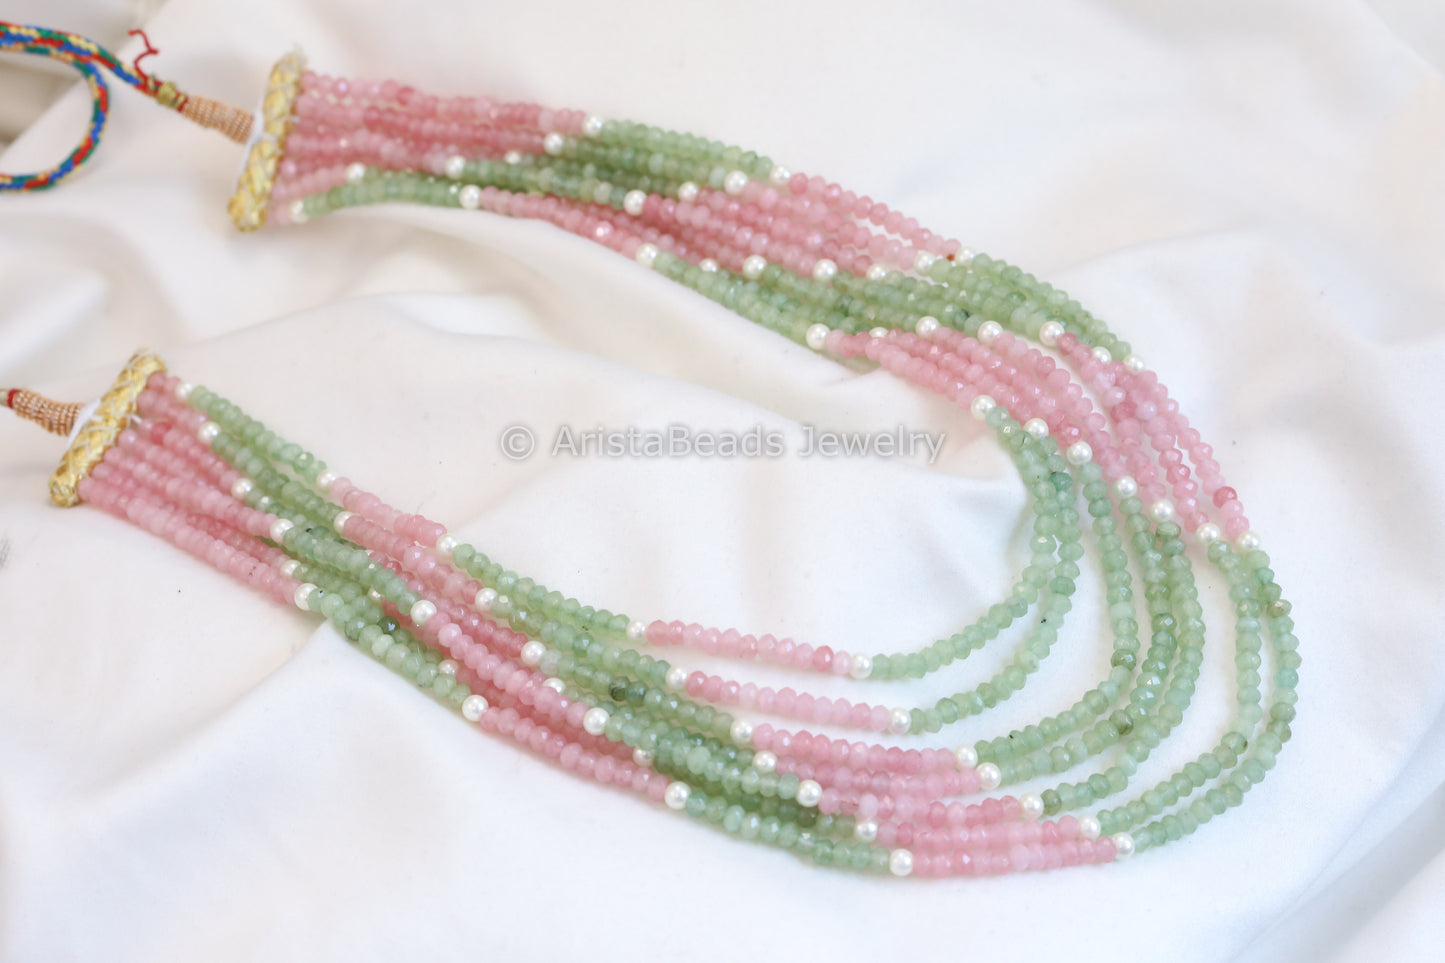 7 Strand Semiprecious Beads Necklace - Style 2